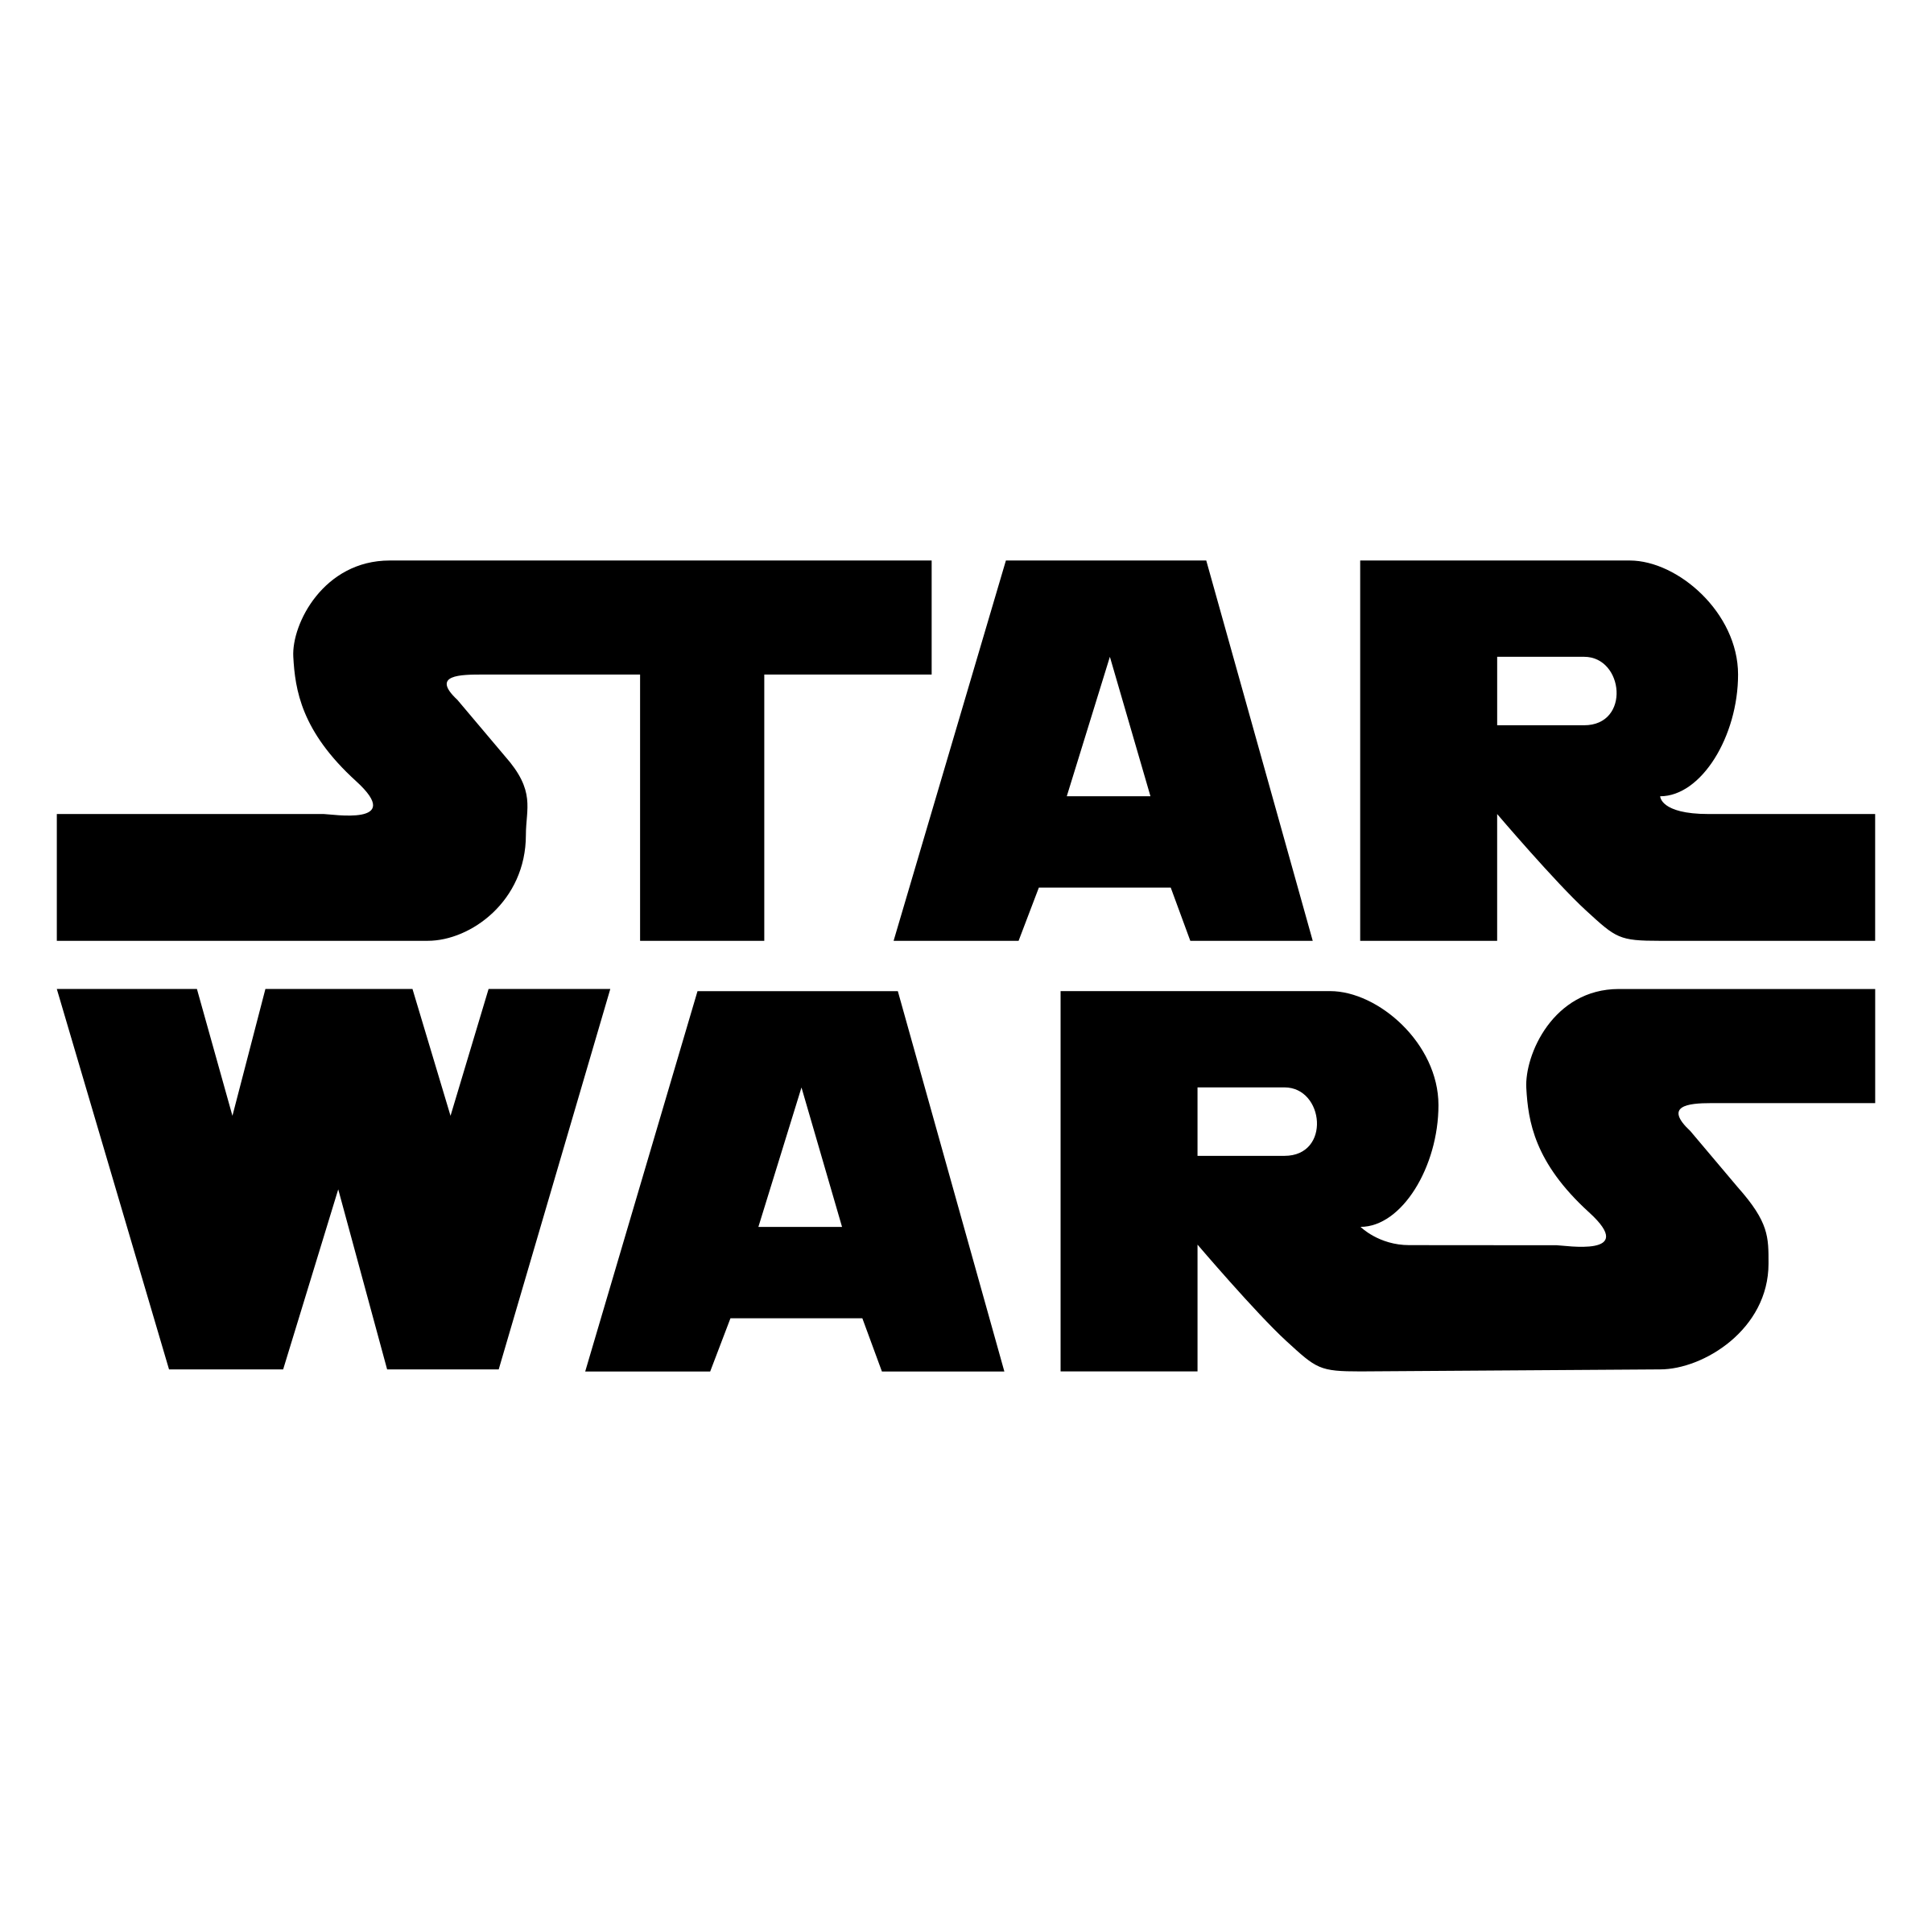 iBox Logo - Star Wars Logo PNG Transparent & SVG Vector - Freebie Supply